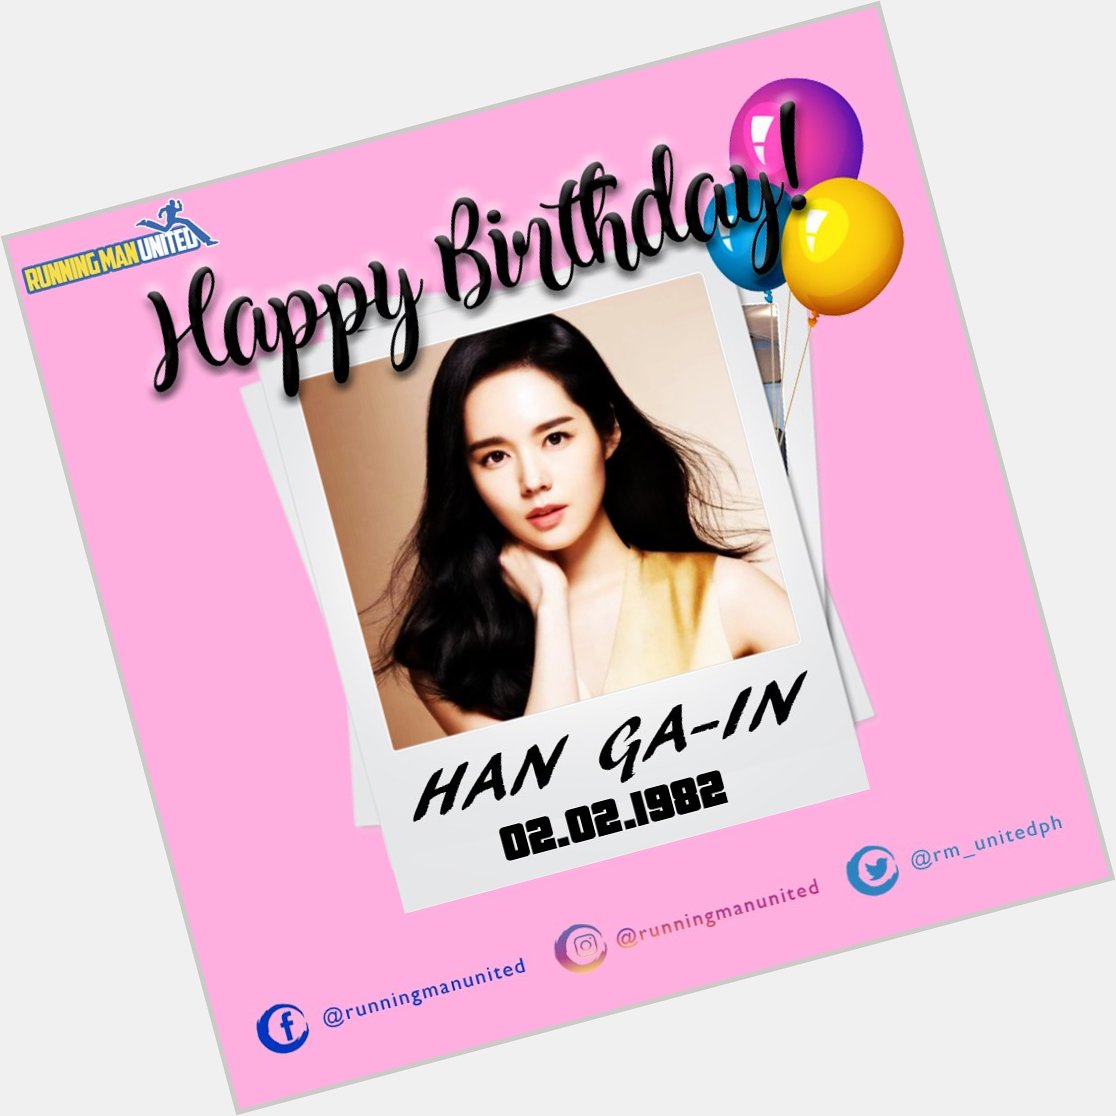 Happy Birthday Han Ga-in! 